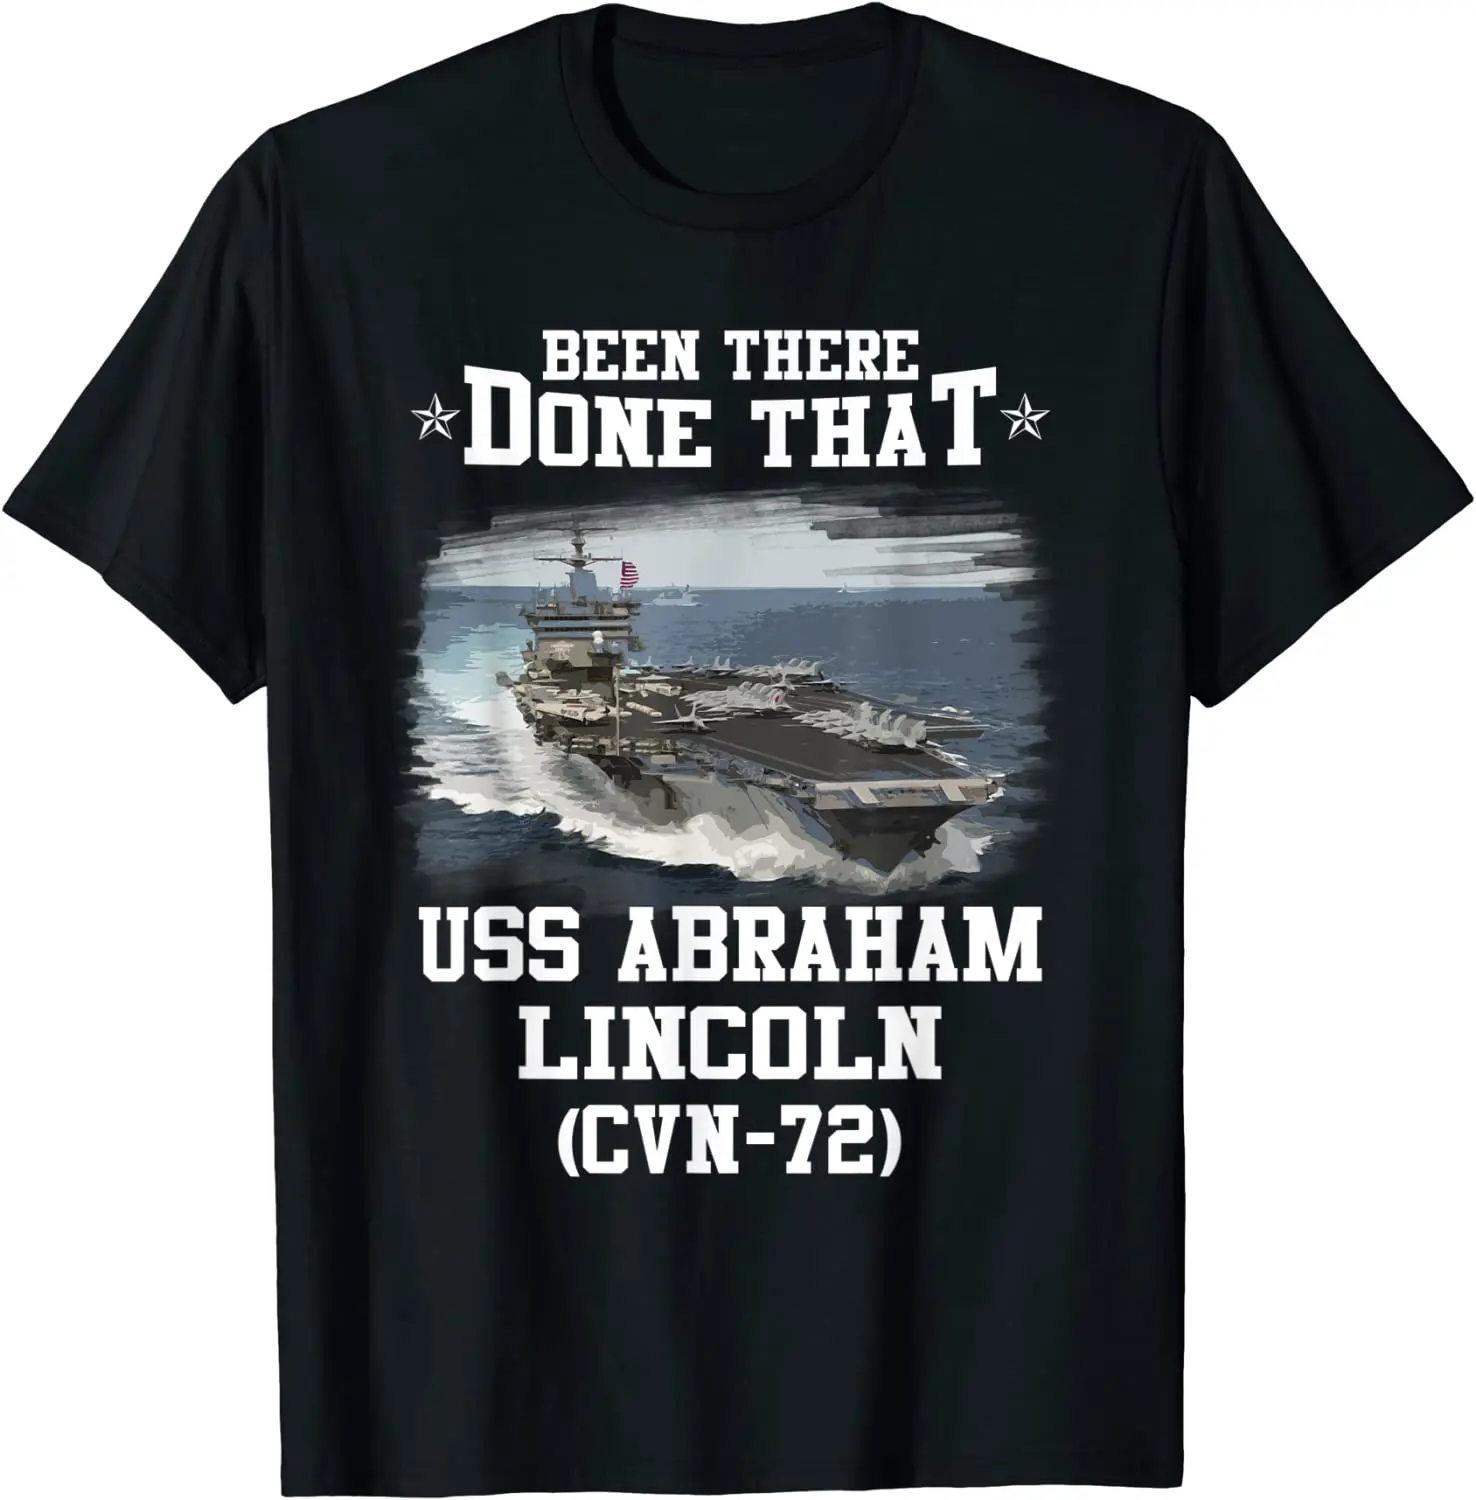 

Navy CVN-72 S Abraham Lincoln Aircaft Carrier T Shirt. New 100% Cotton Short Sleeve O-Neck T-shirt Casual Mens Top